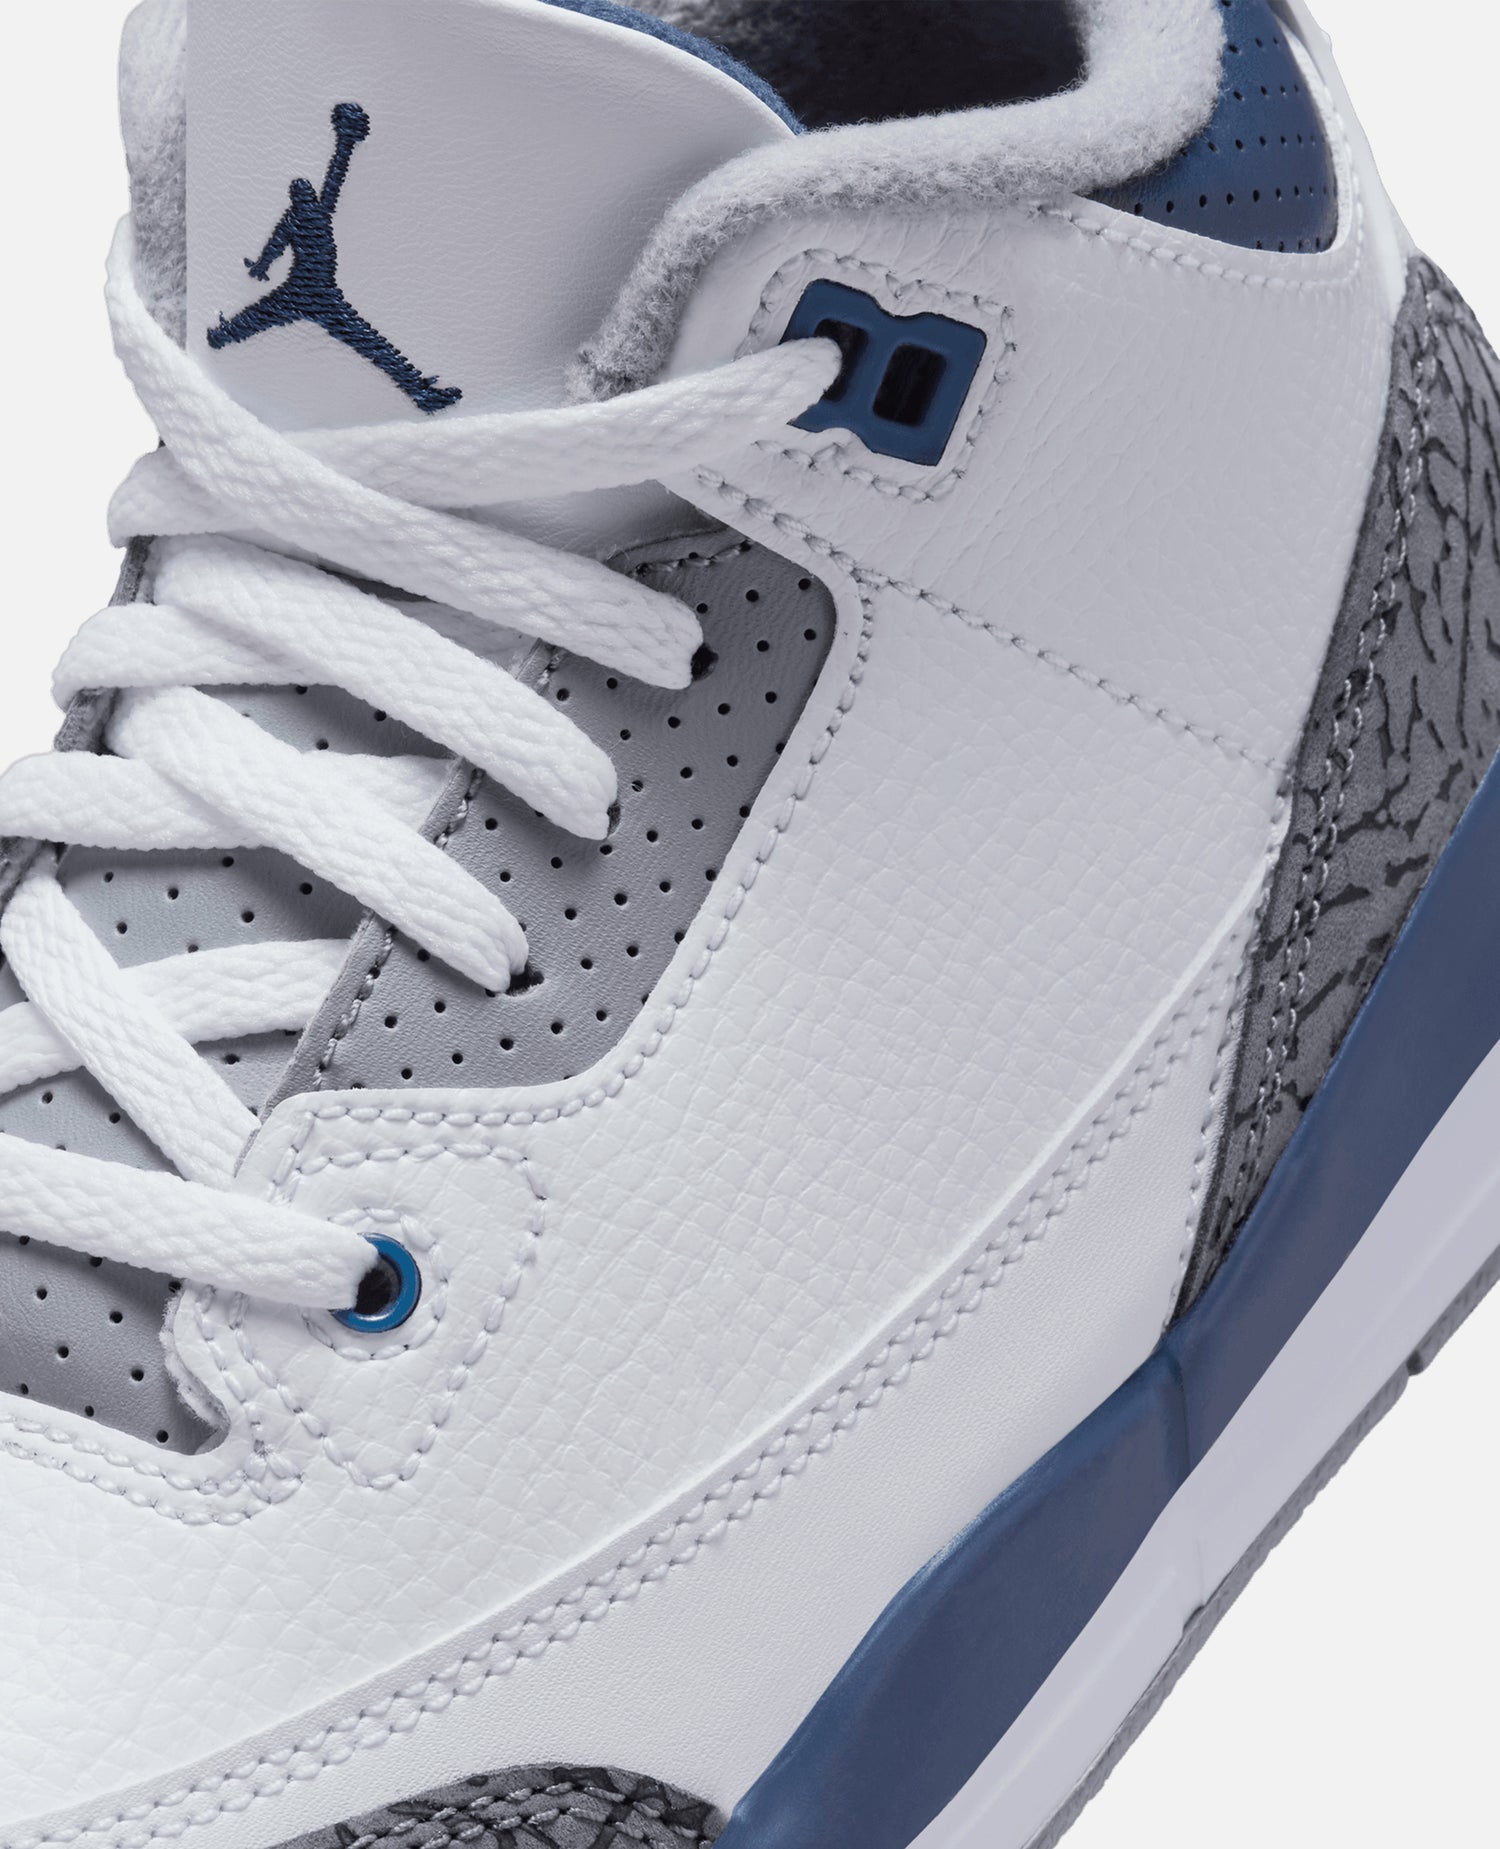 Nike Jordan 3 Retro (PS) (White/Midnight Navy-Cement Grey-Black)